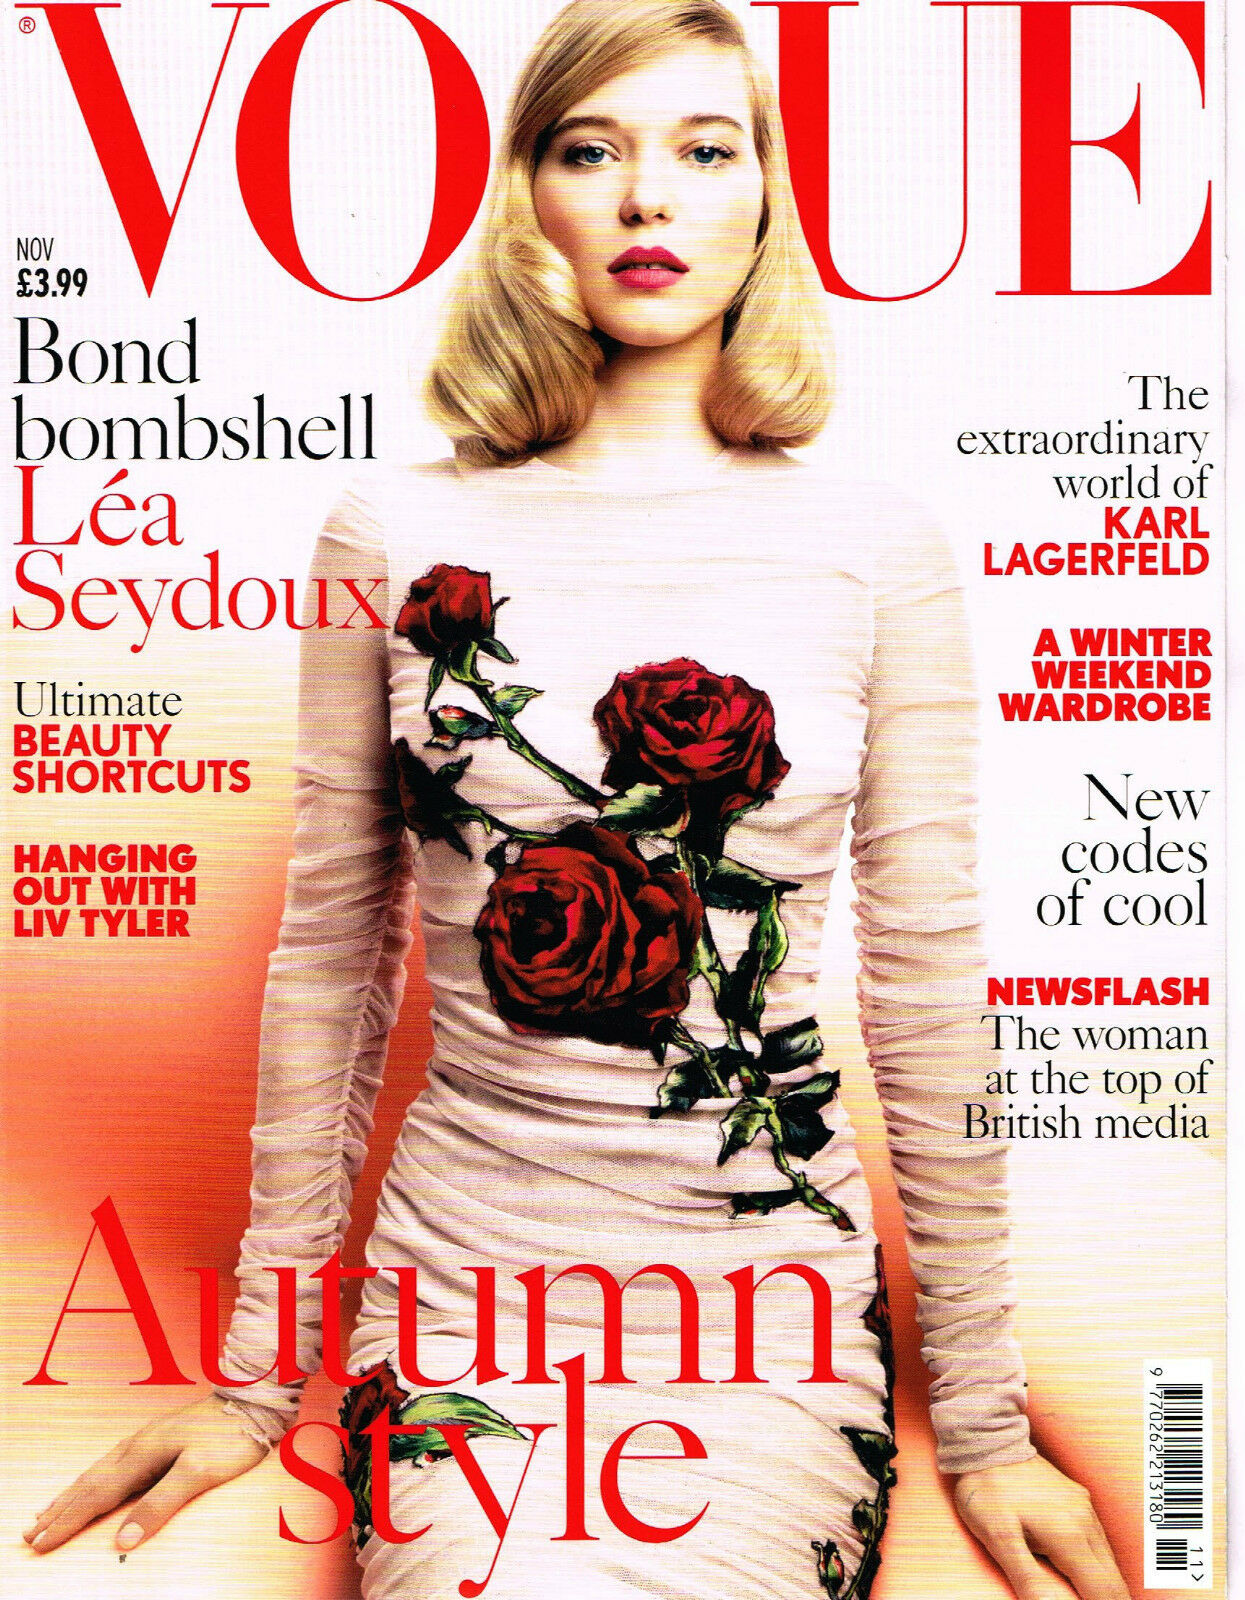 Vogue UK November 2015, , Bond bombshell Lea Seydoux 